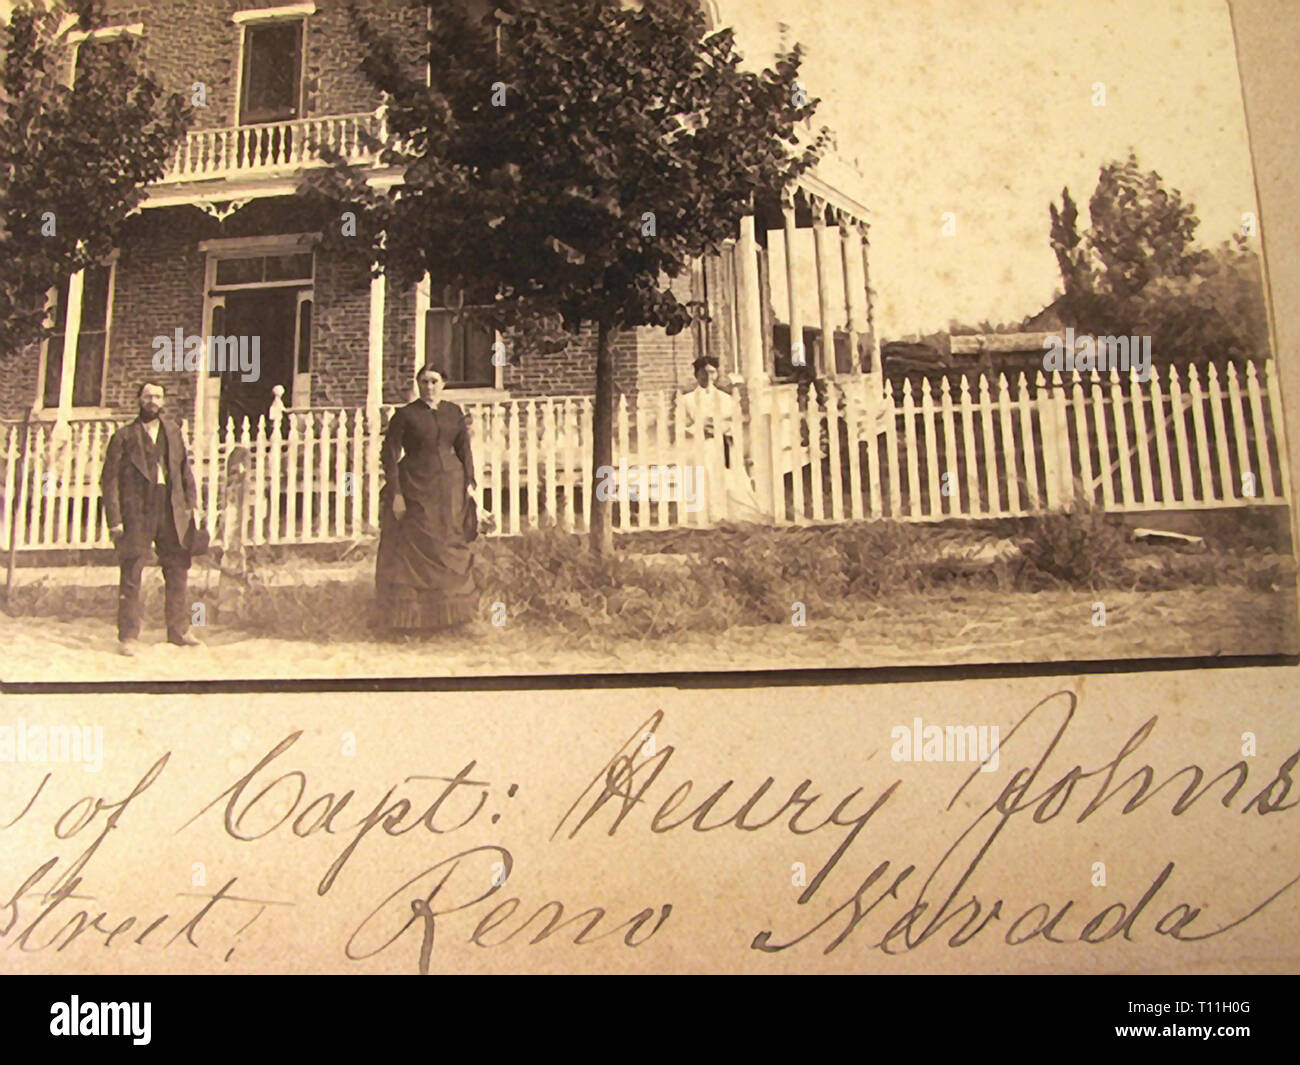 Photos of early America-Old photo of Capt. Henry Johnson family home, Reno Nevada. Stock Photo